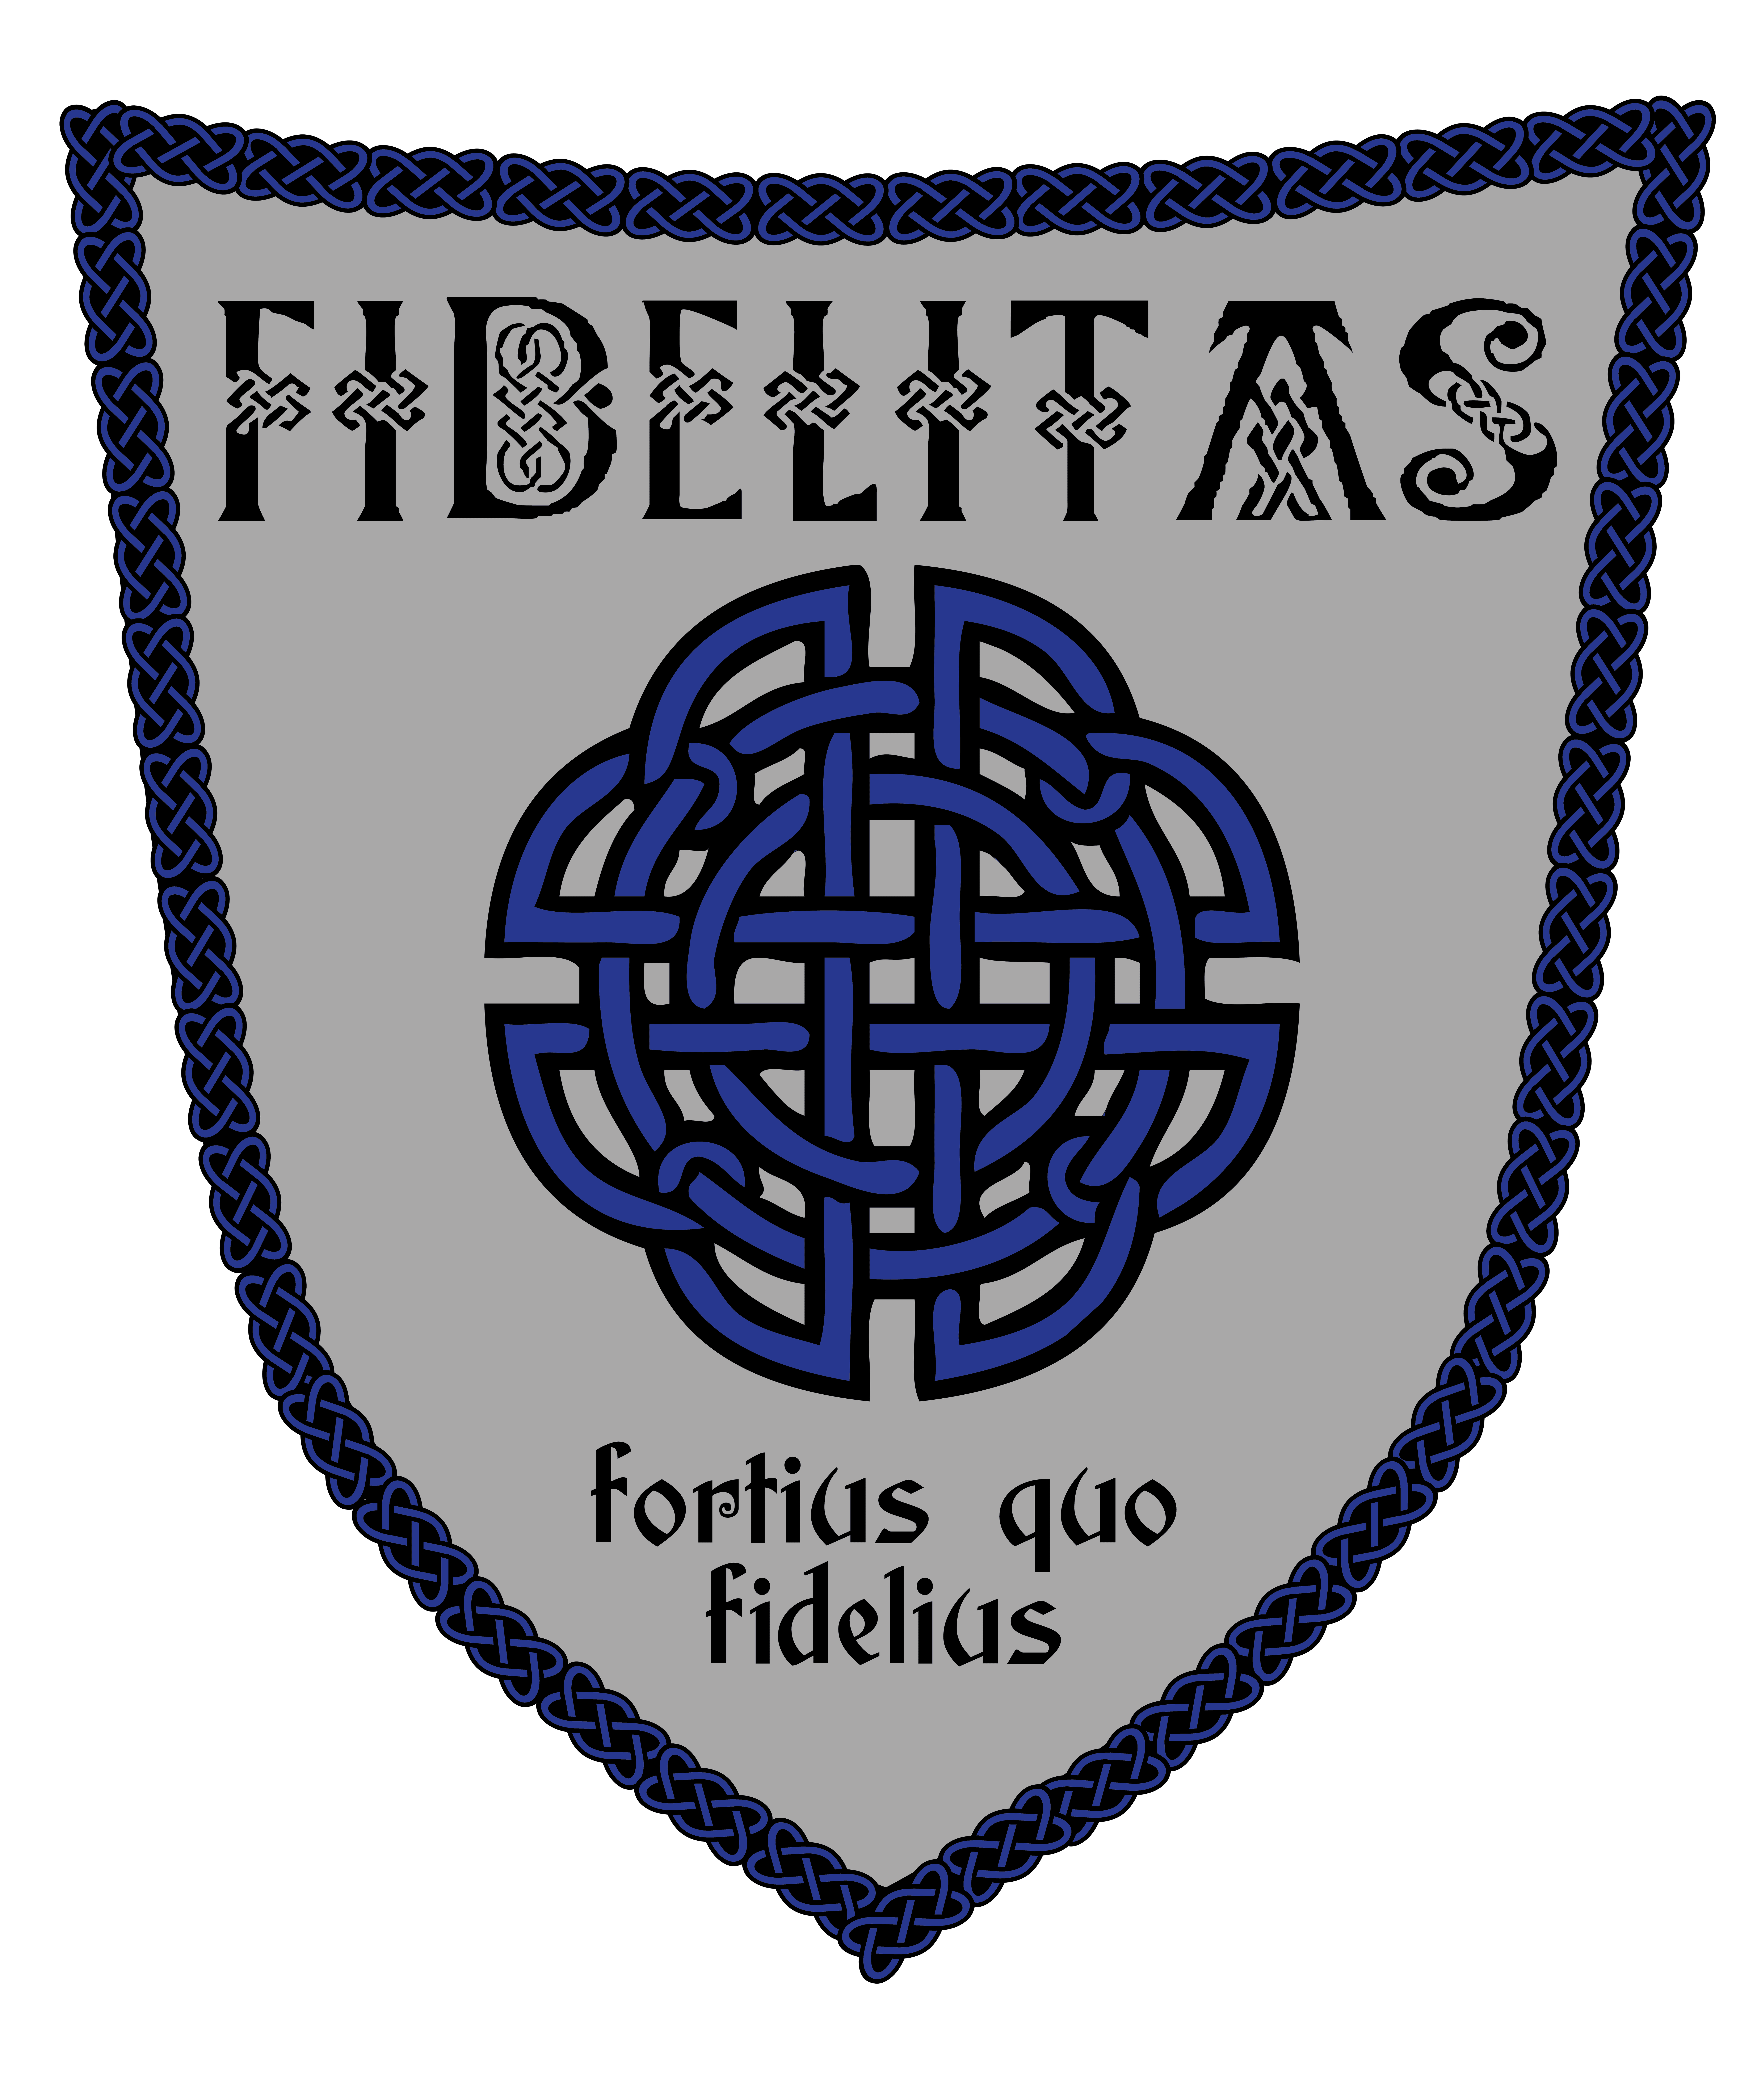 Fidelitas Flag-01-1